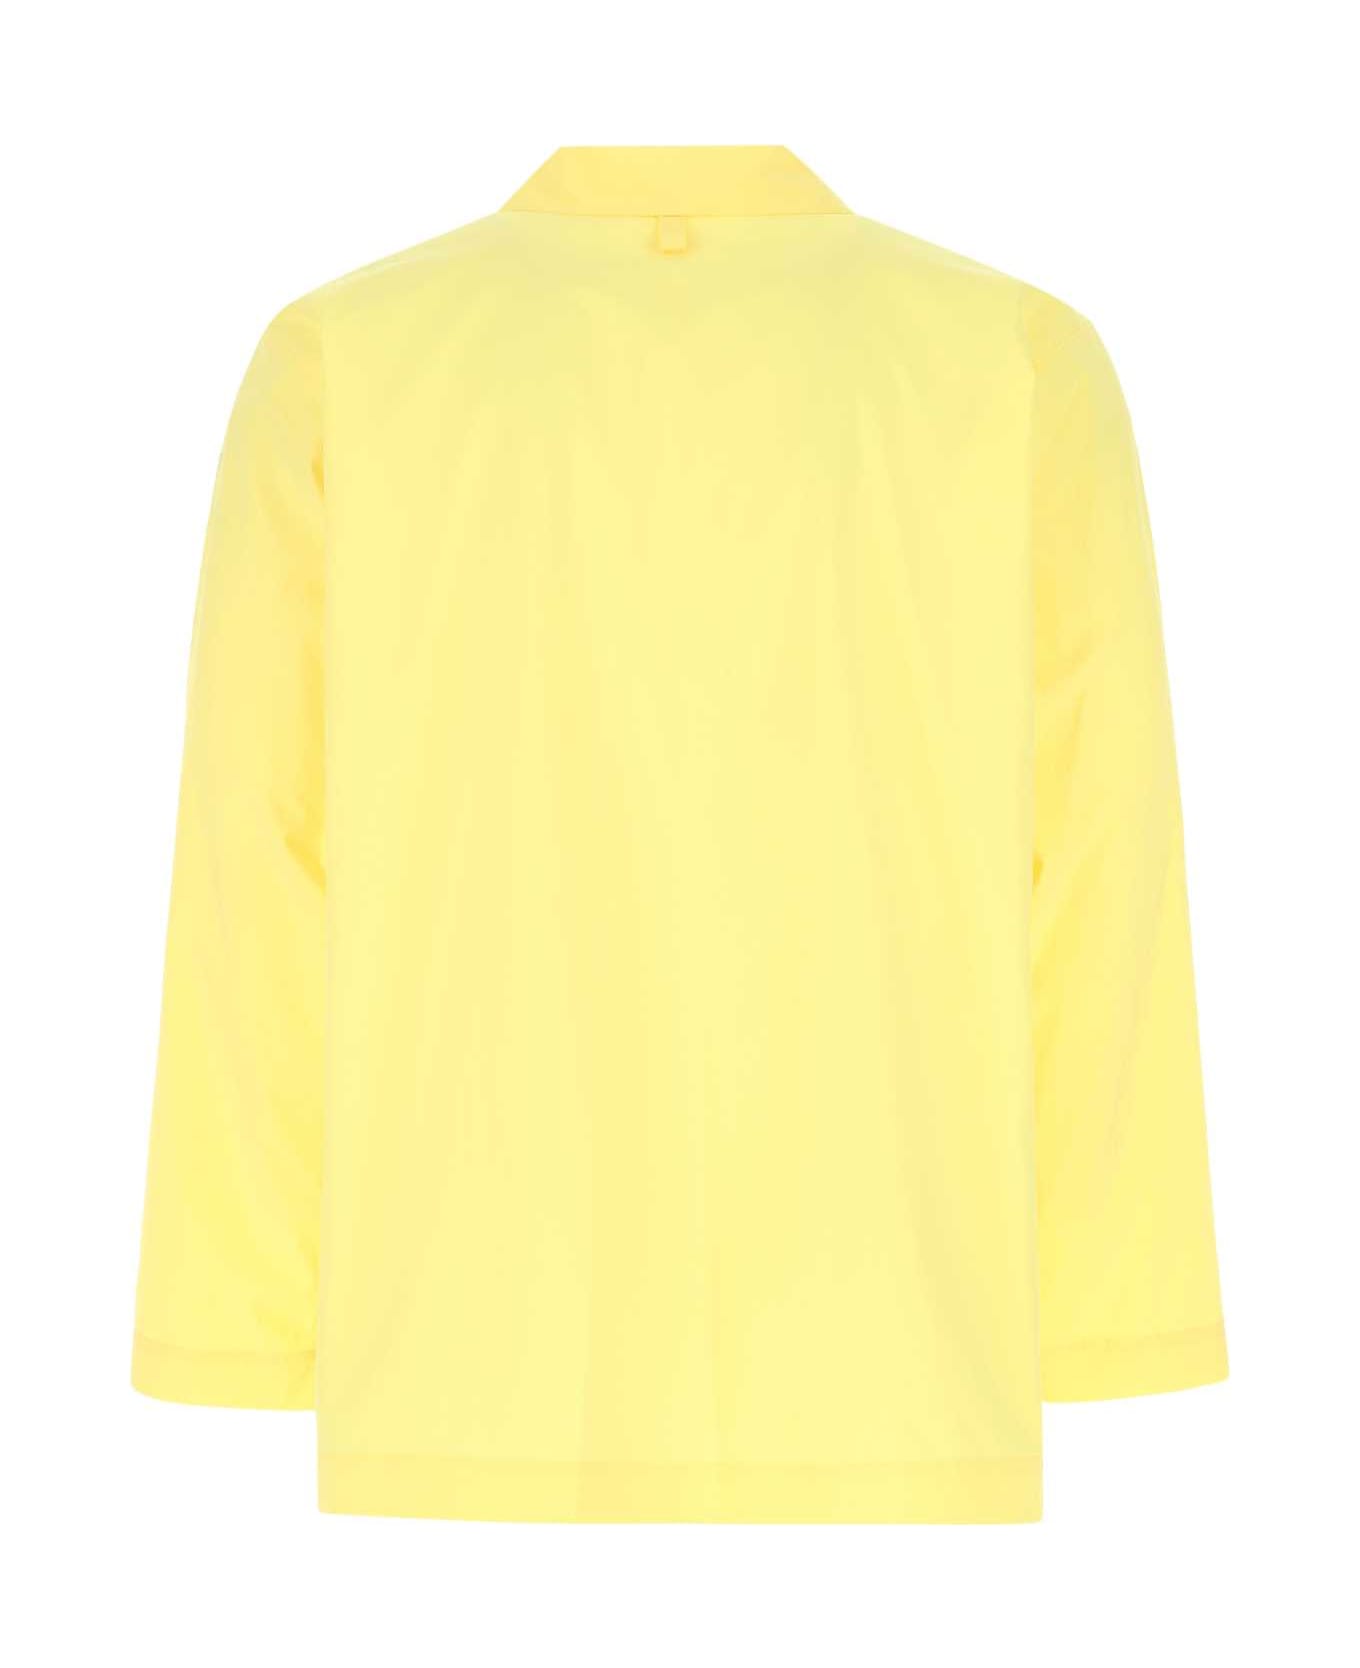 Homme Plissé Issey Miyake Yellow Polyester Shirt - 52 シャツ